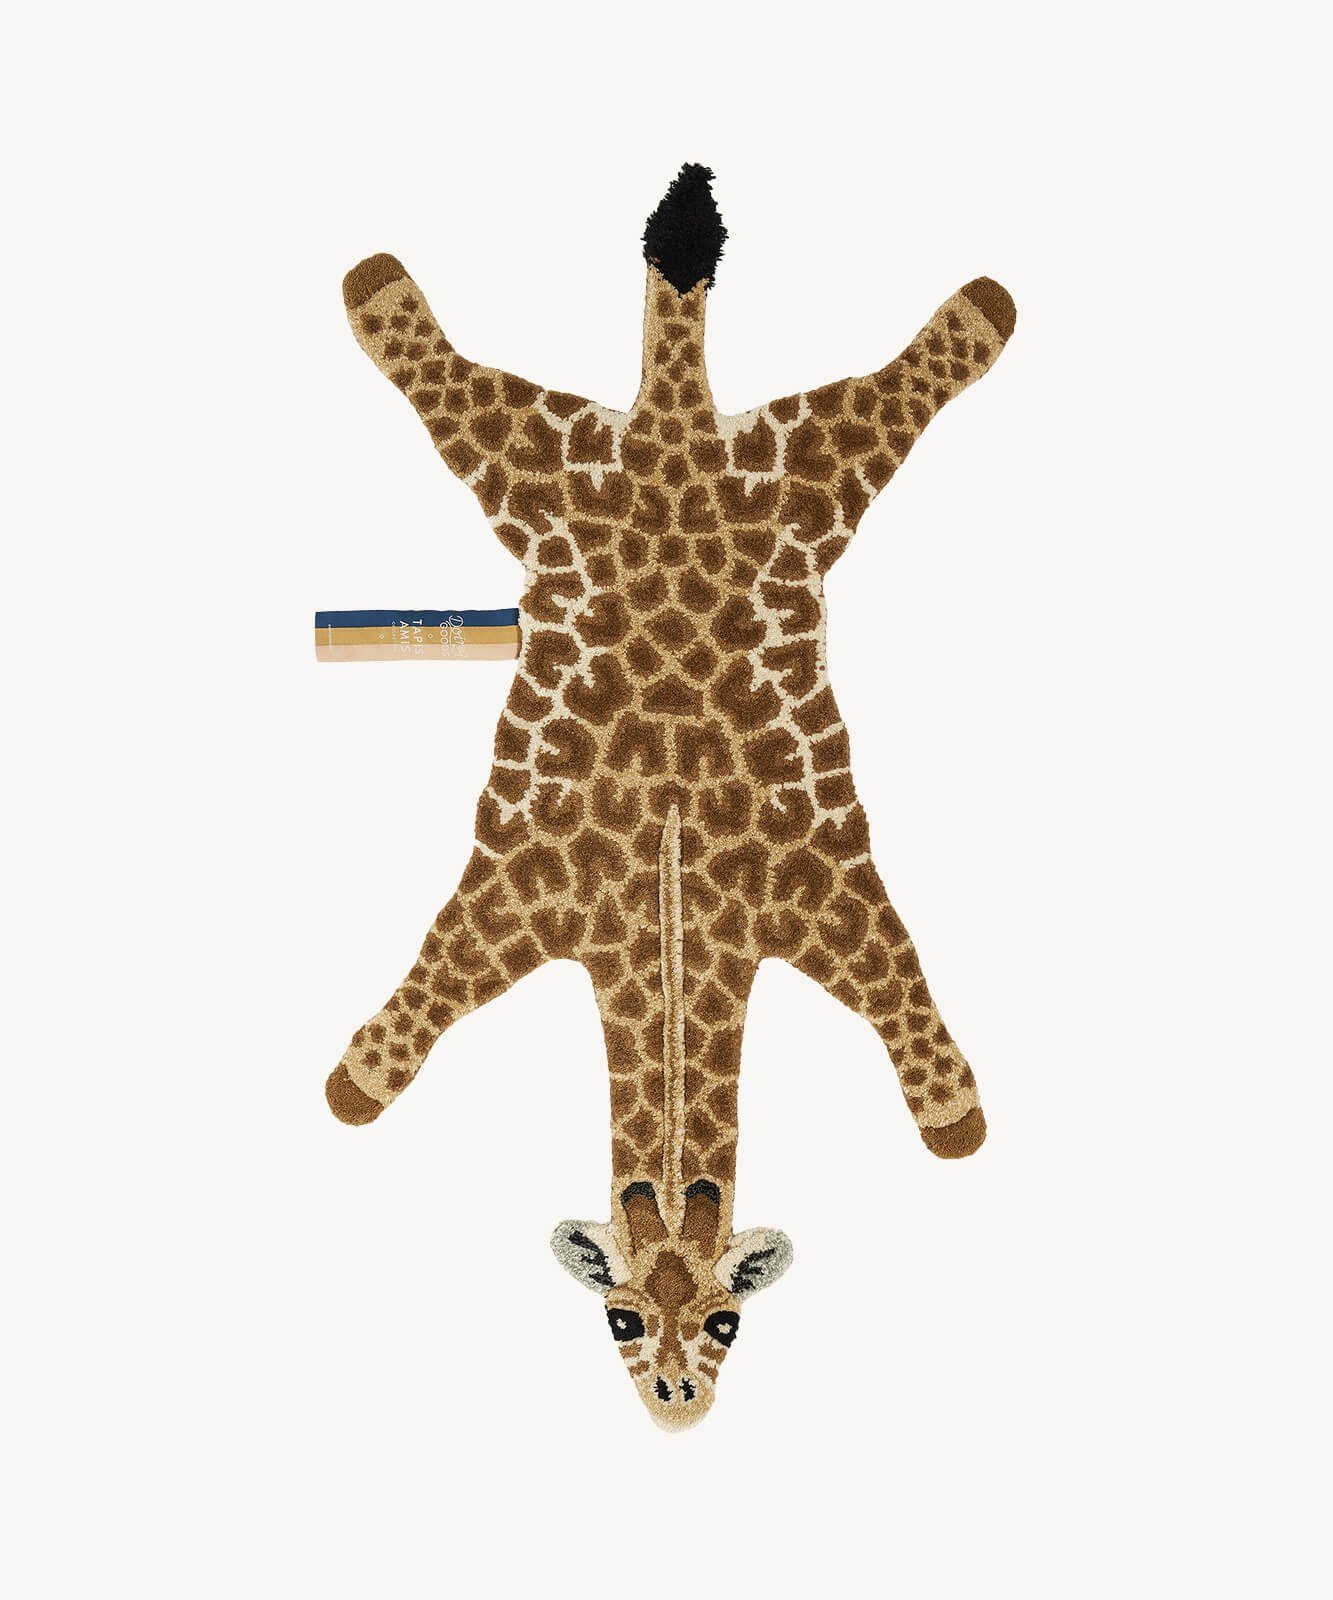 Kinderteppich Giraffe, Kinderzimmer, Dekoration, Doing Goods, Handarbeit